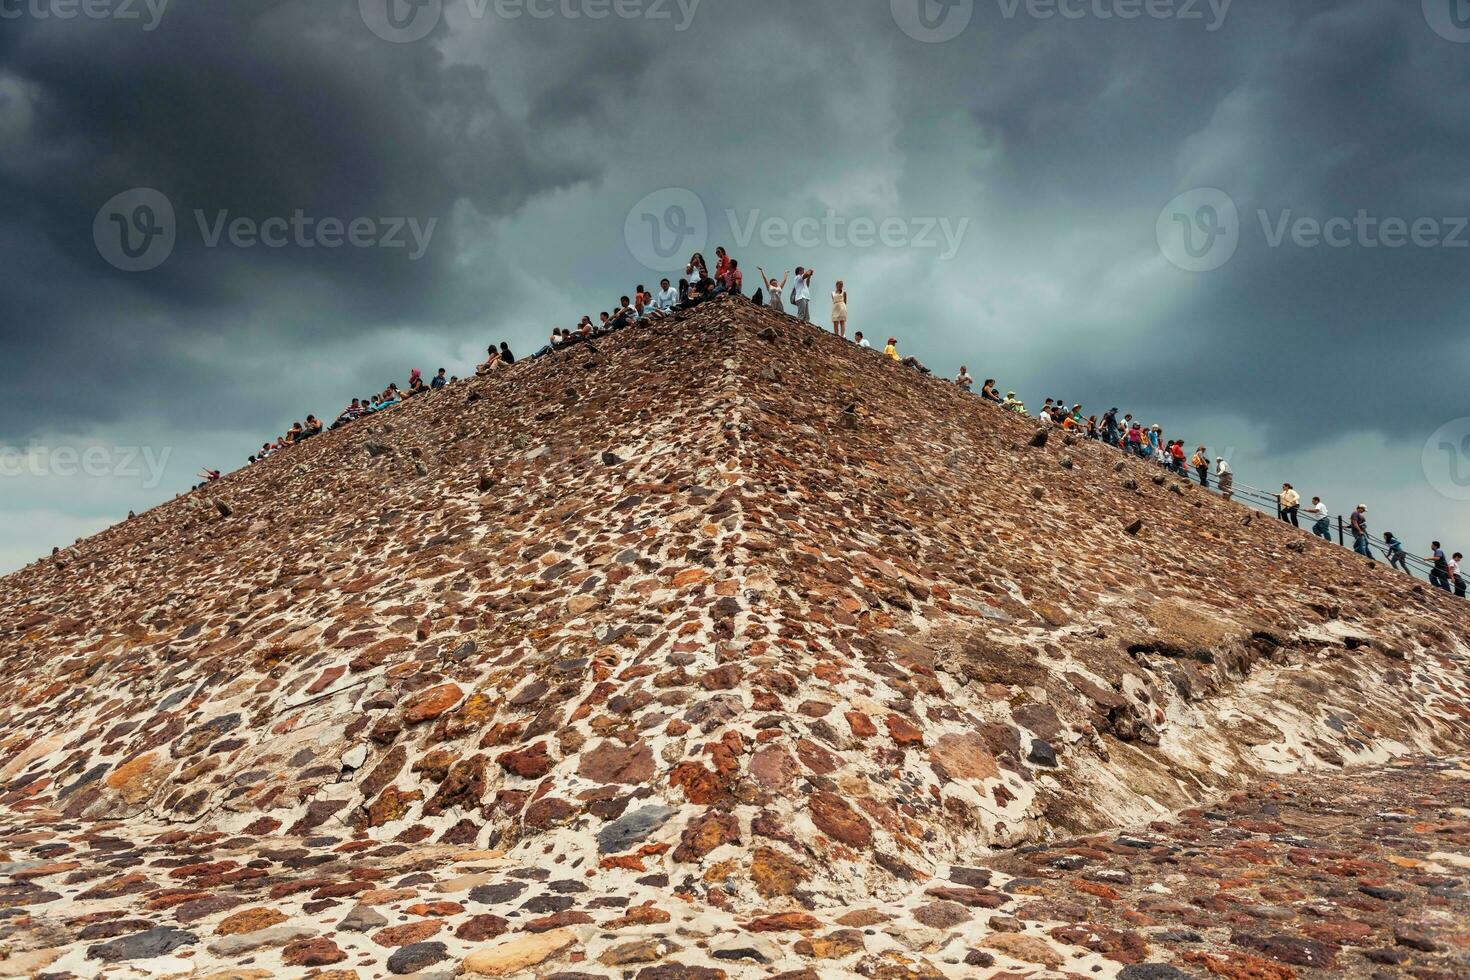 pirâmides do México foto